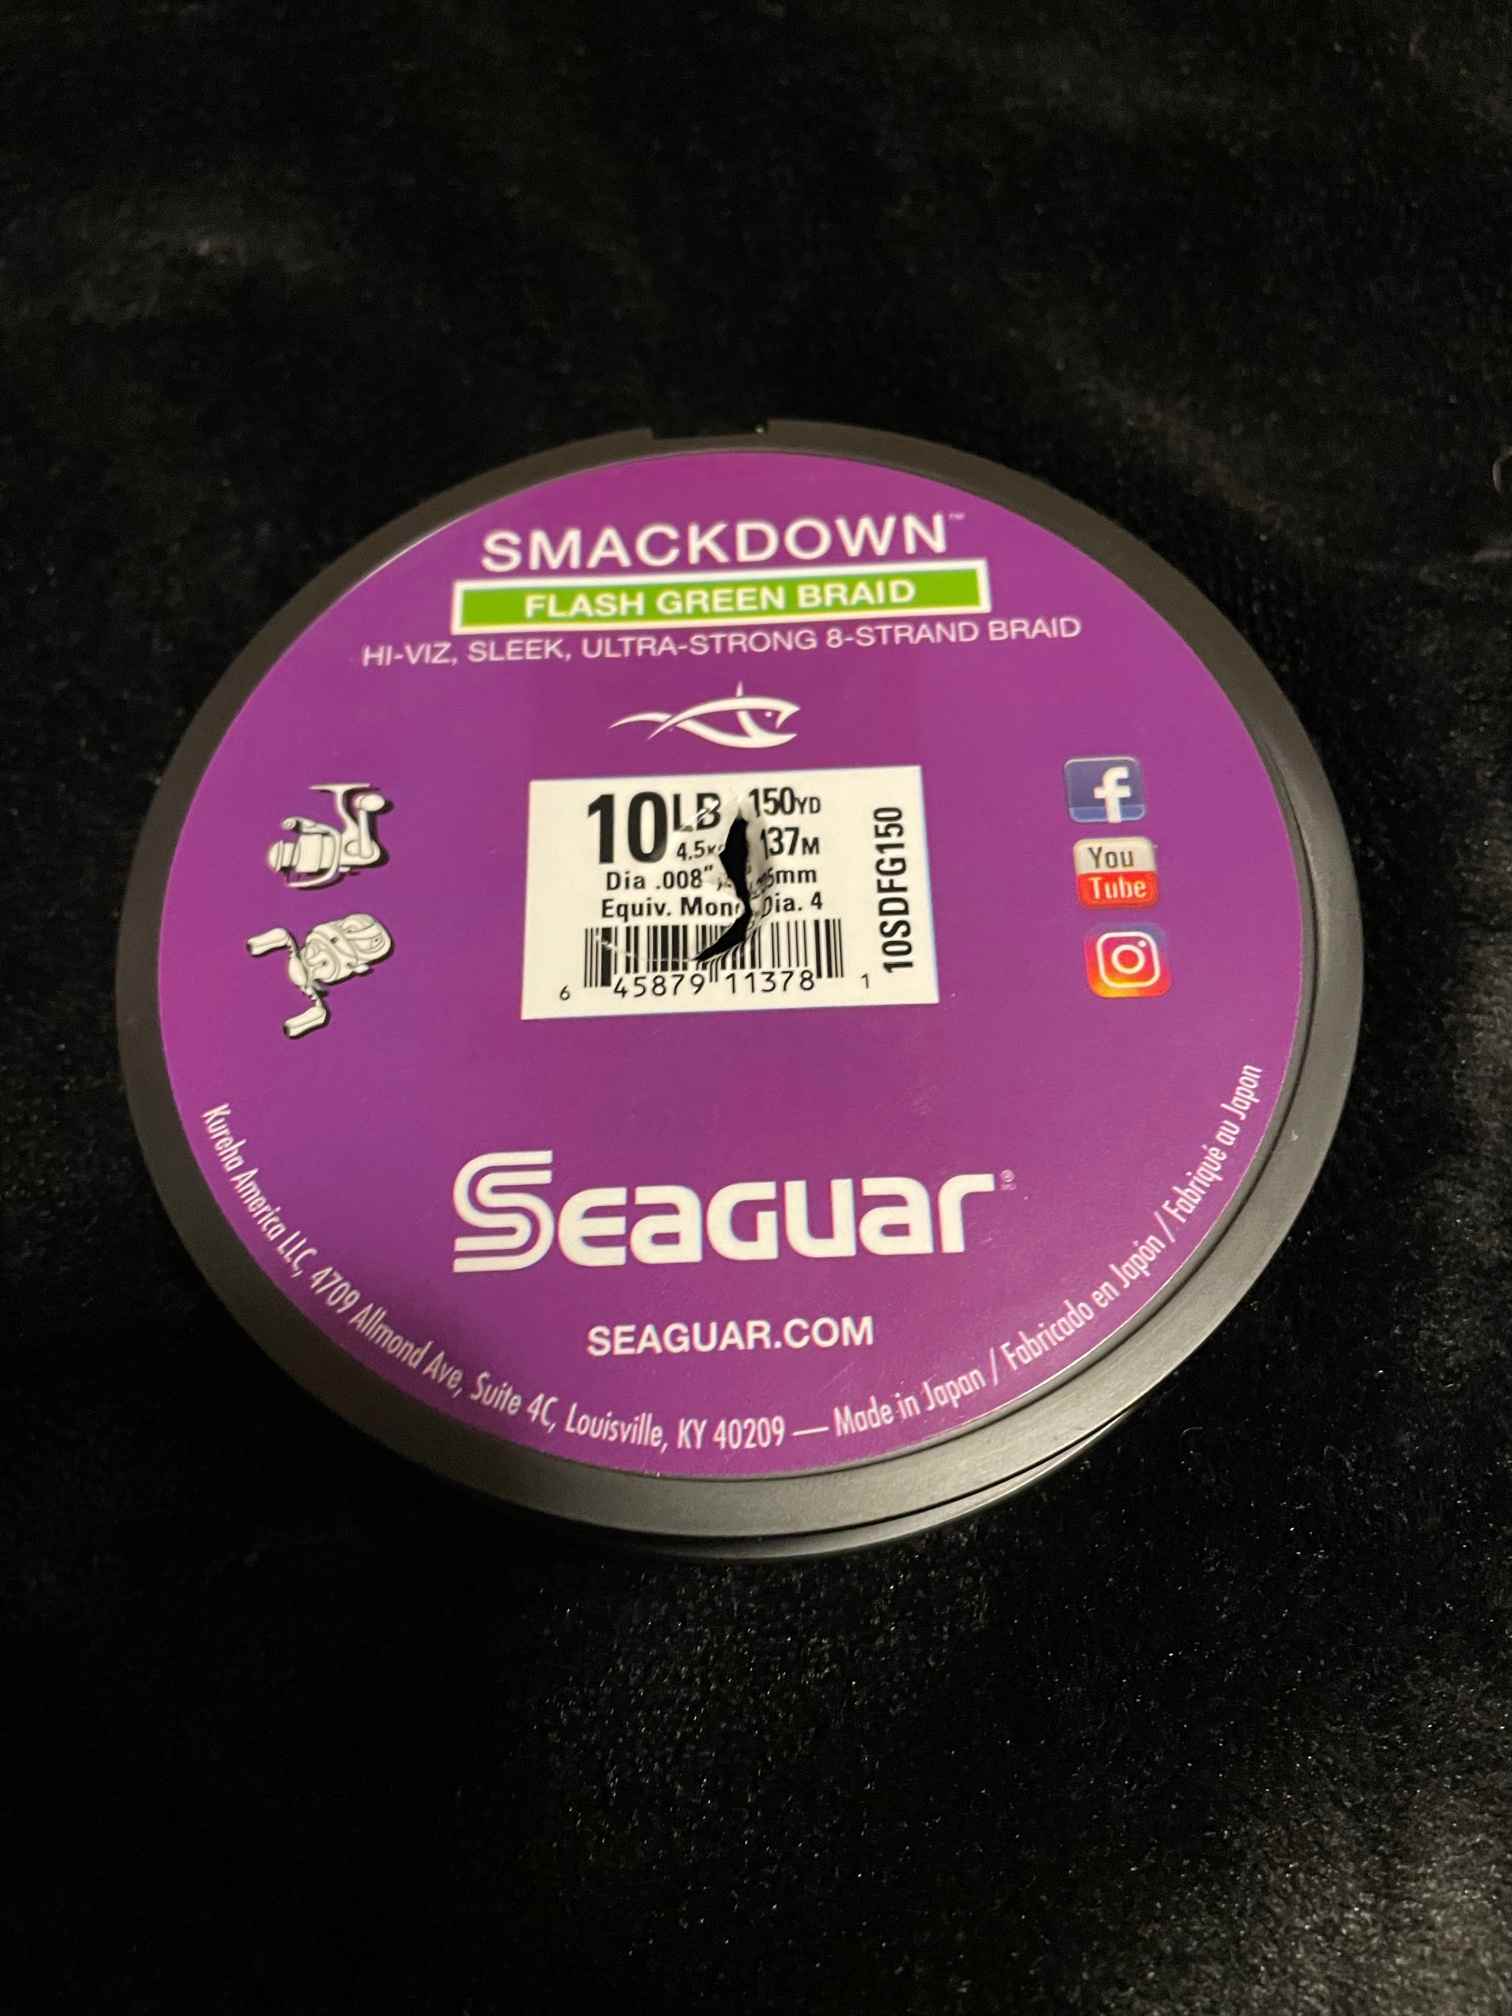 Seaguar Smackdown Braided Line Flash Green